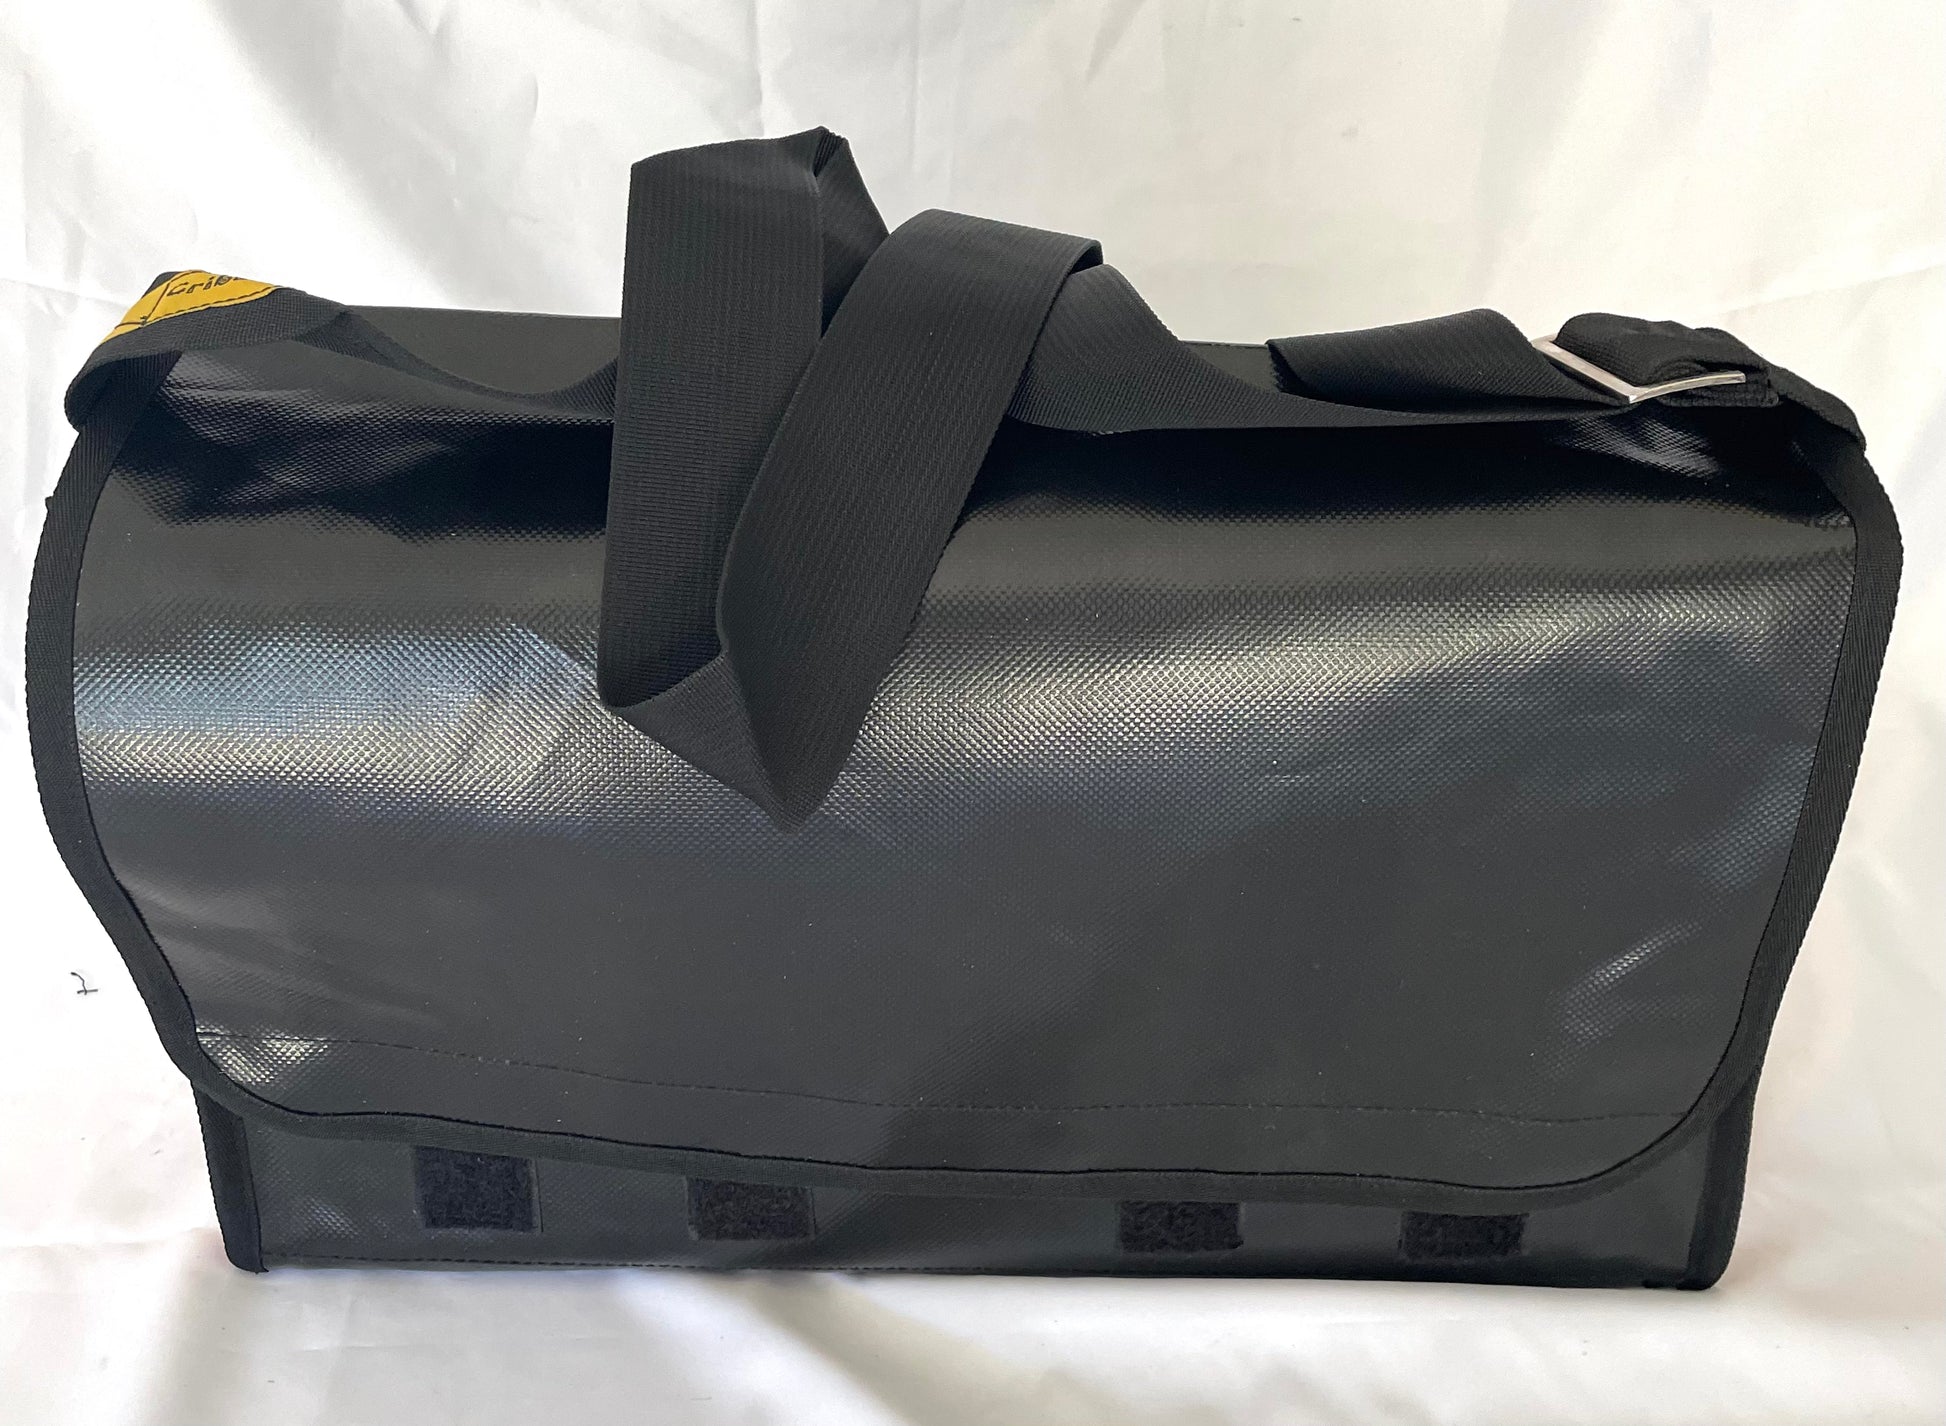 CribBags Small Black and Orange Crib bag. Tough Vinyl Construct, Document pocket inside